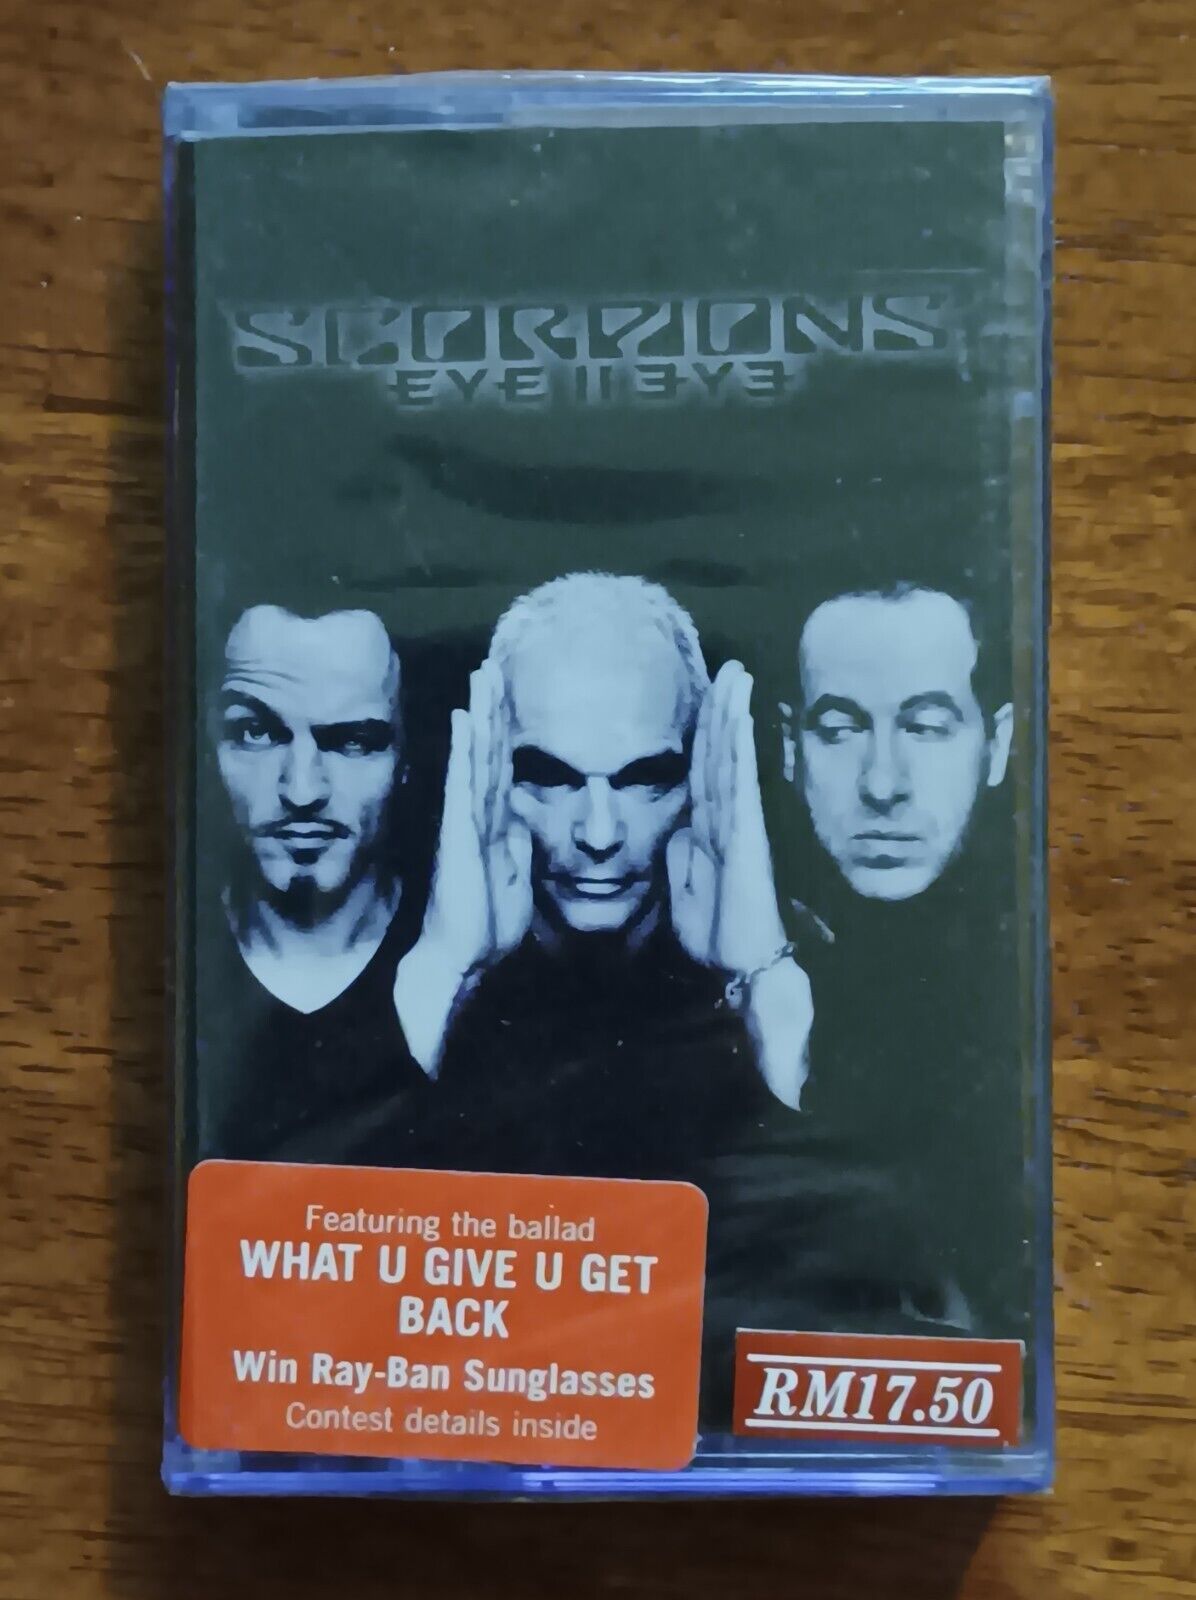 Scorpions - Eye II Eye - Malaysia Edition Cassette (Brand New Sealed)